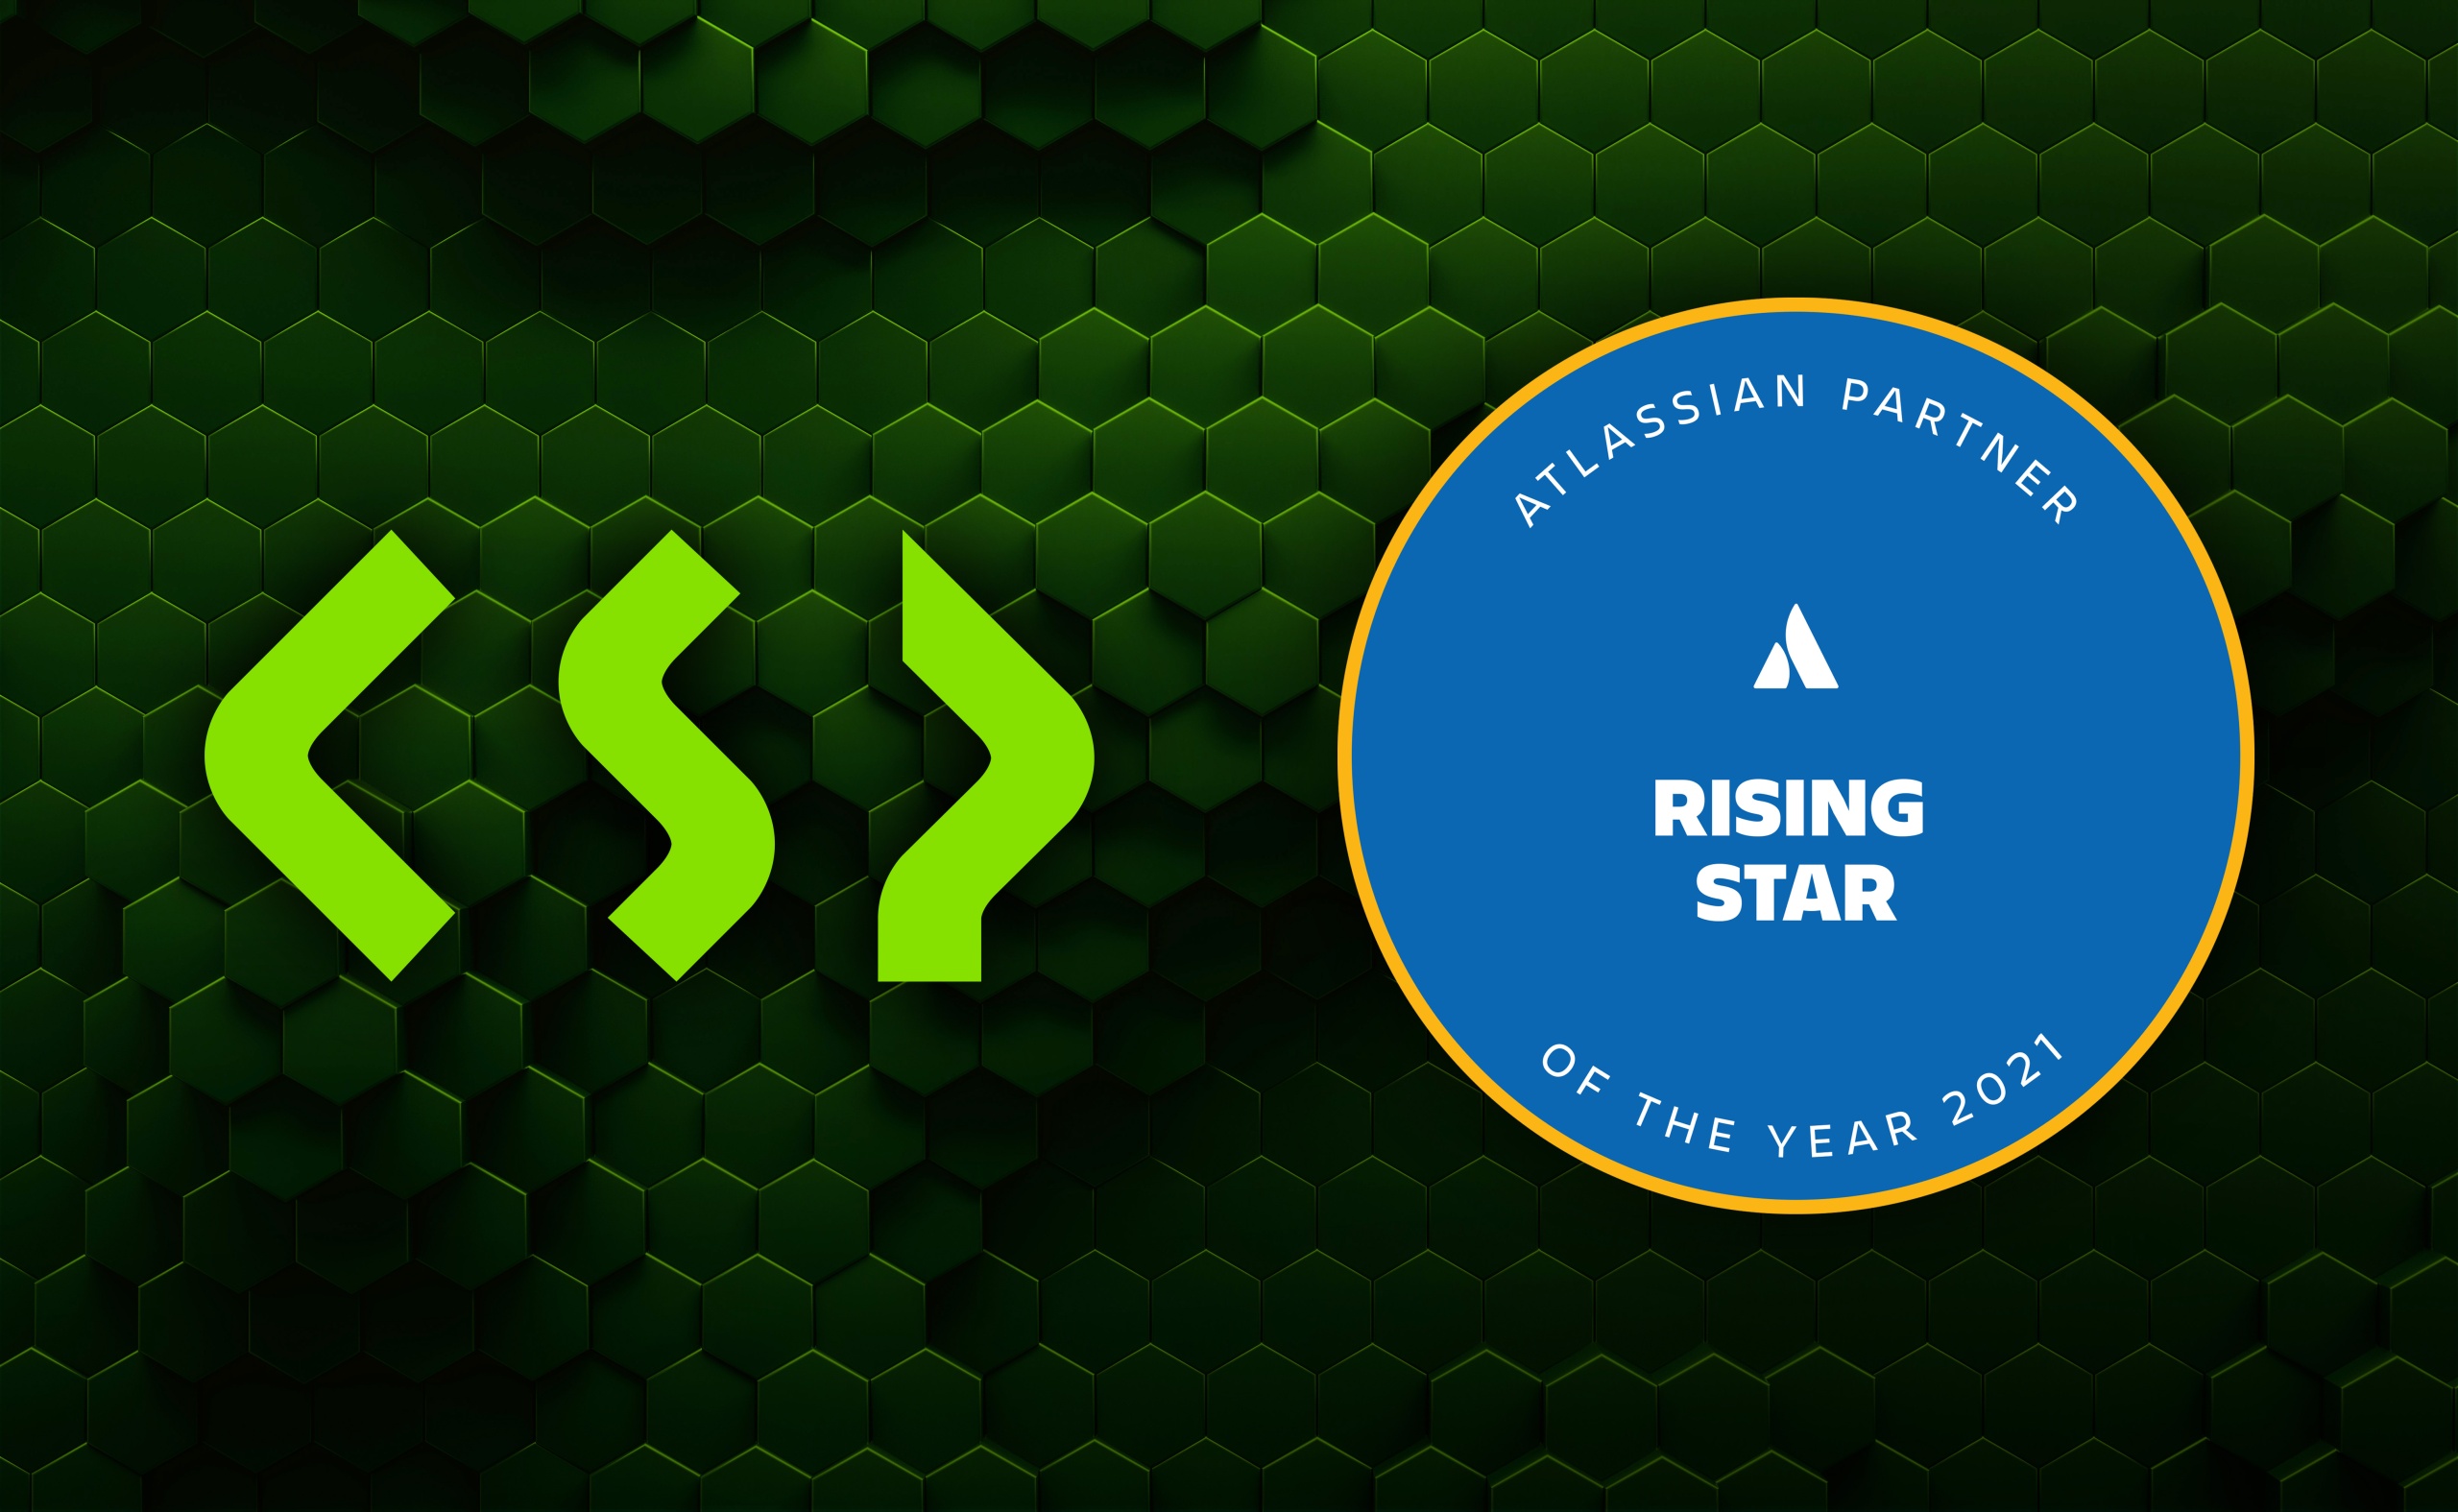 CSP Recebe Prêmio Atlassian como Parceiro Atlassian do Ano